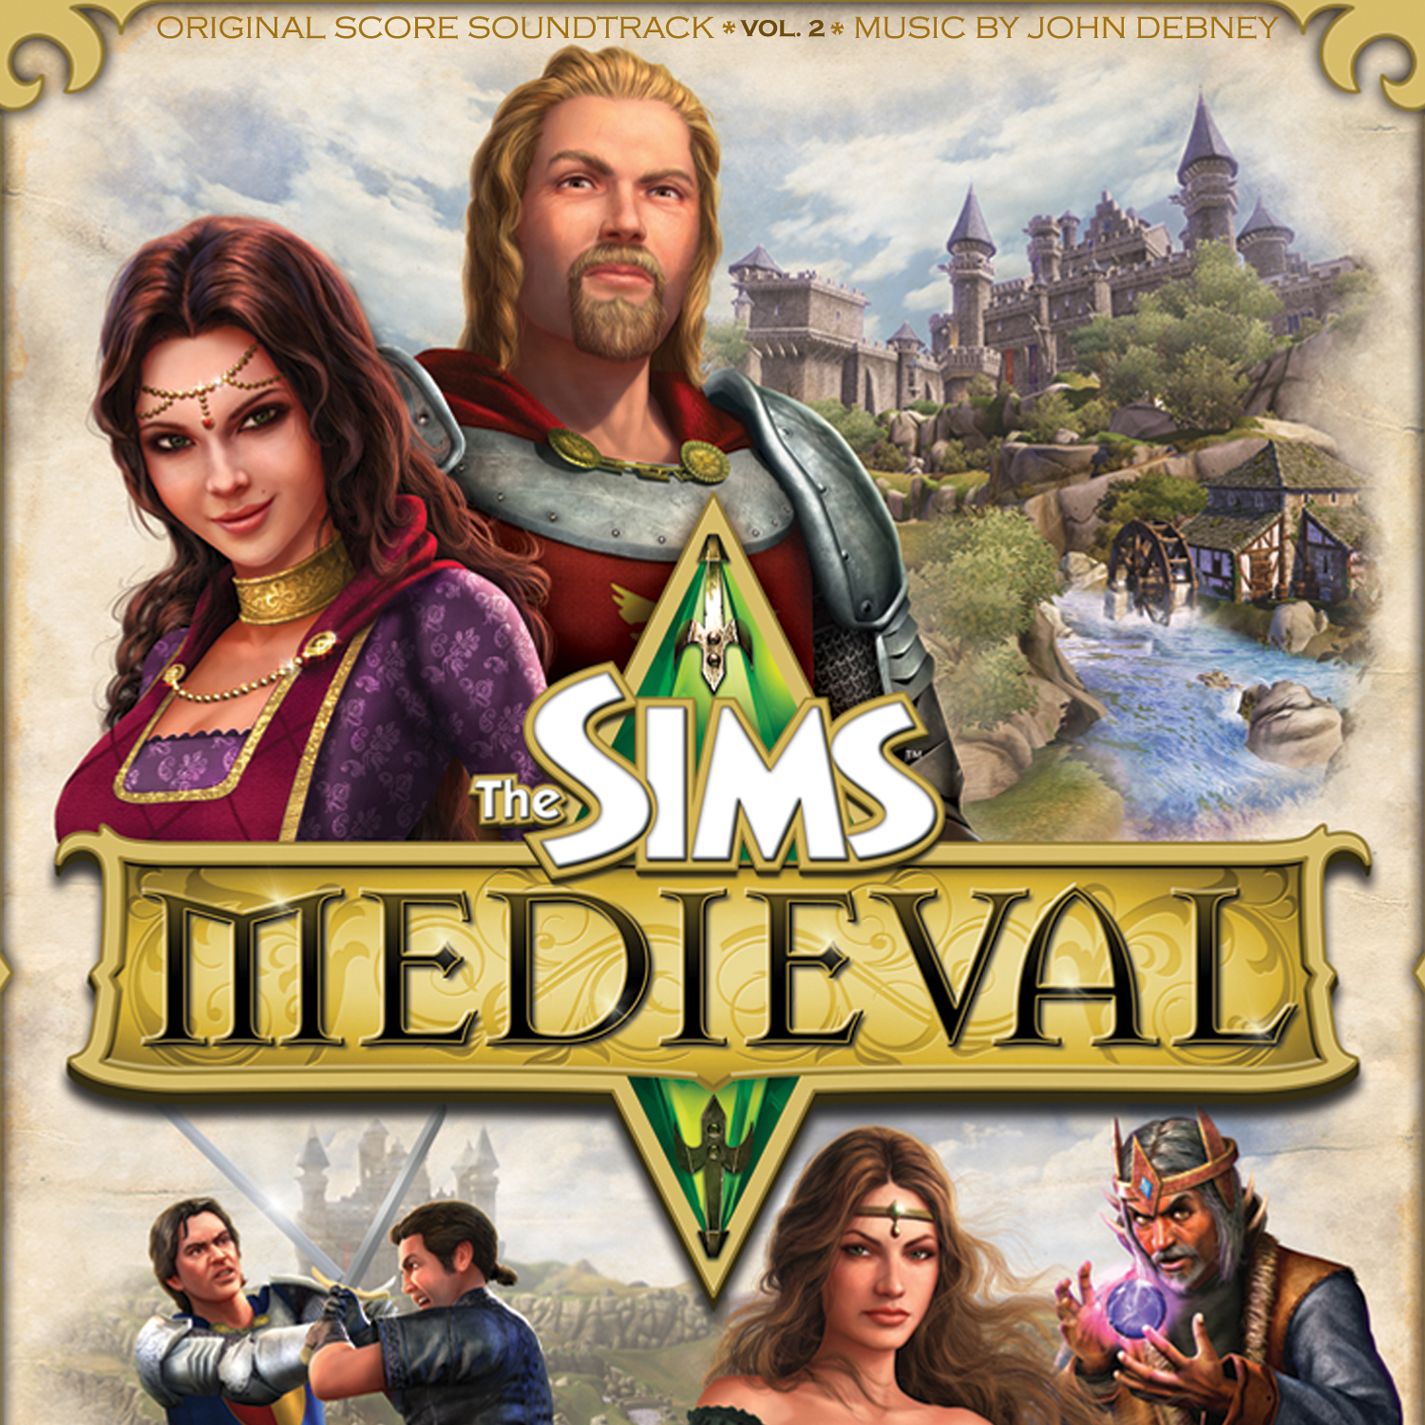 The Sims Medieval Original Score Soundtrack Vol. 2